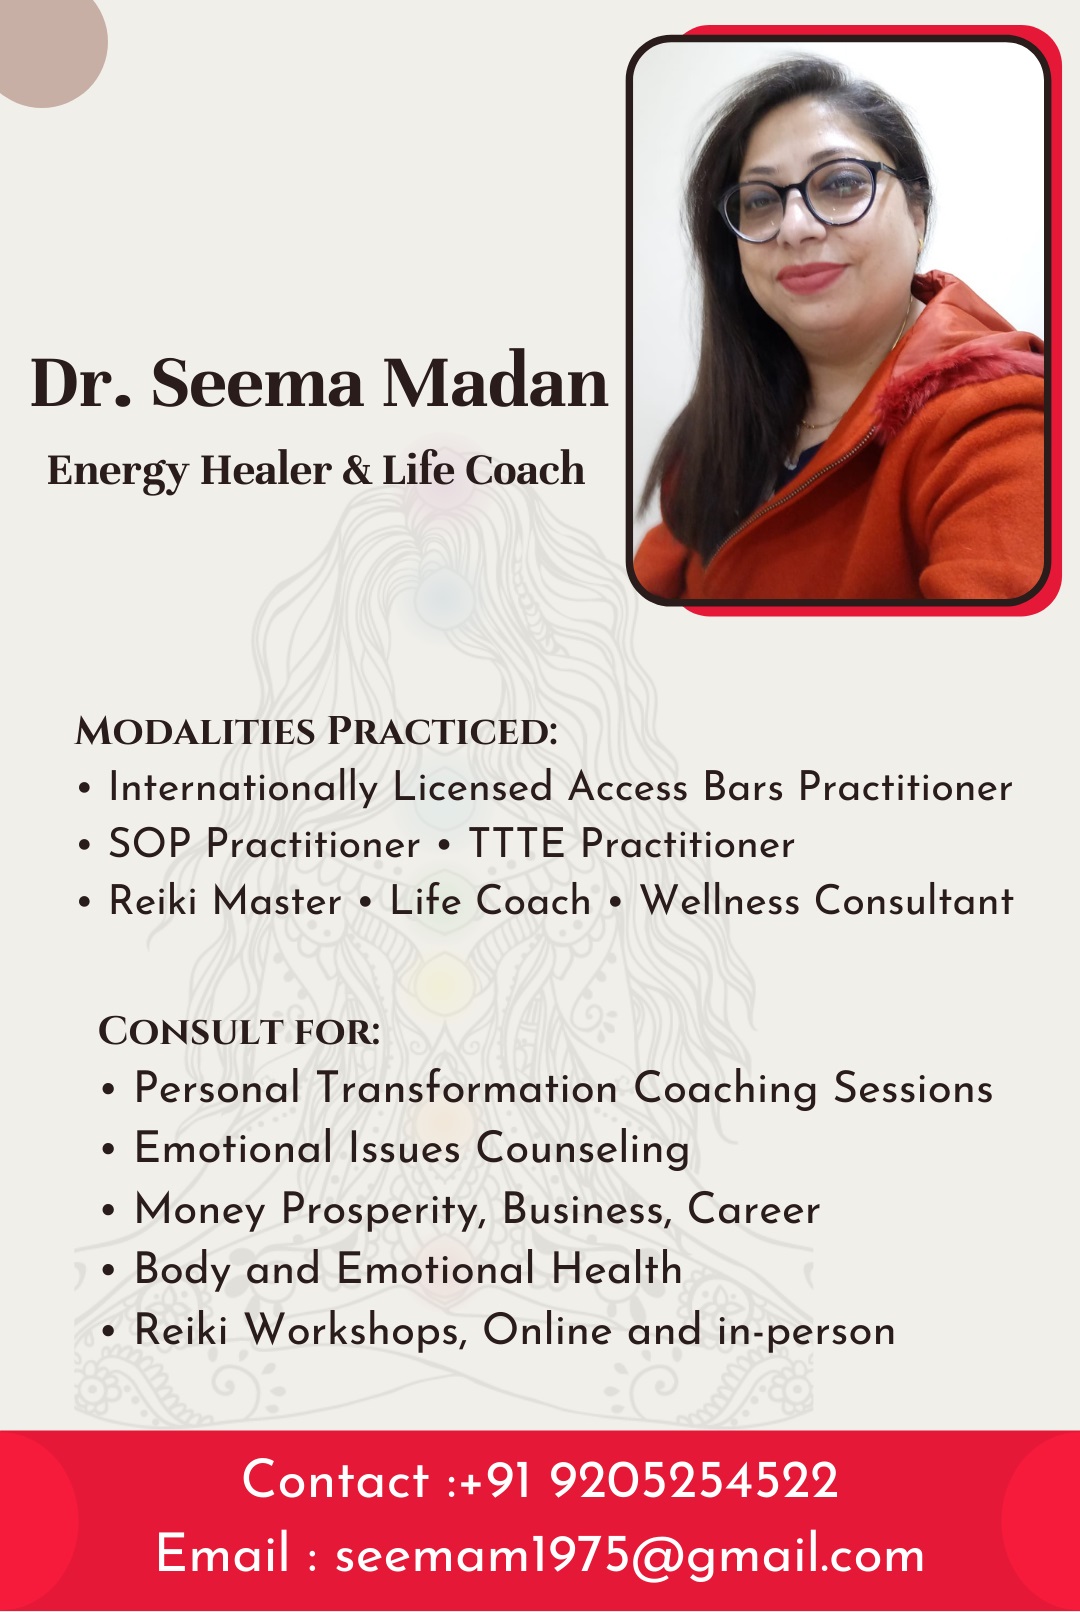 Dr. Seema Madan - Energy Healer & Life Coach - Jamshedpur